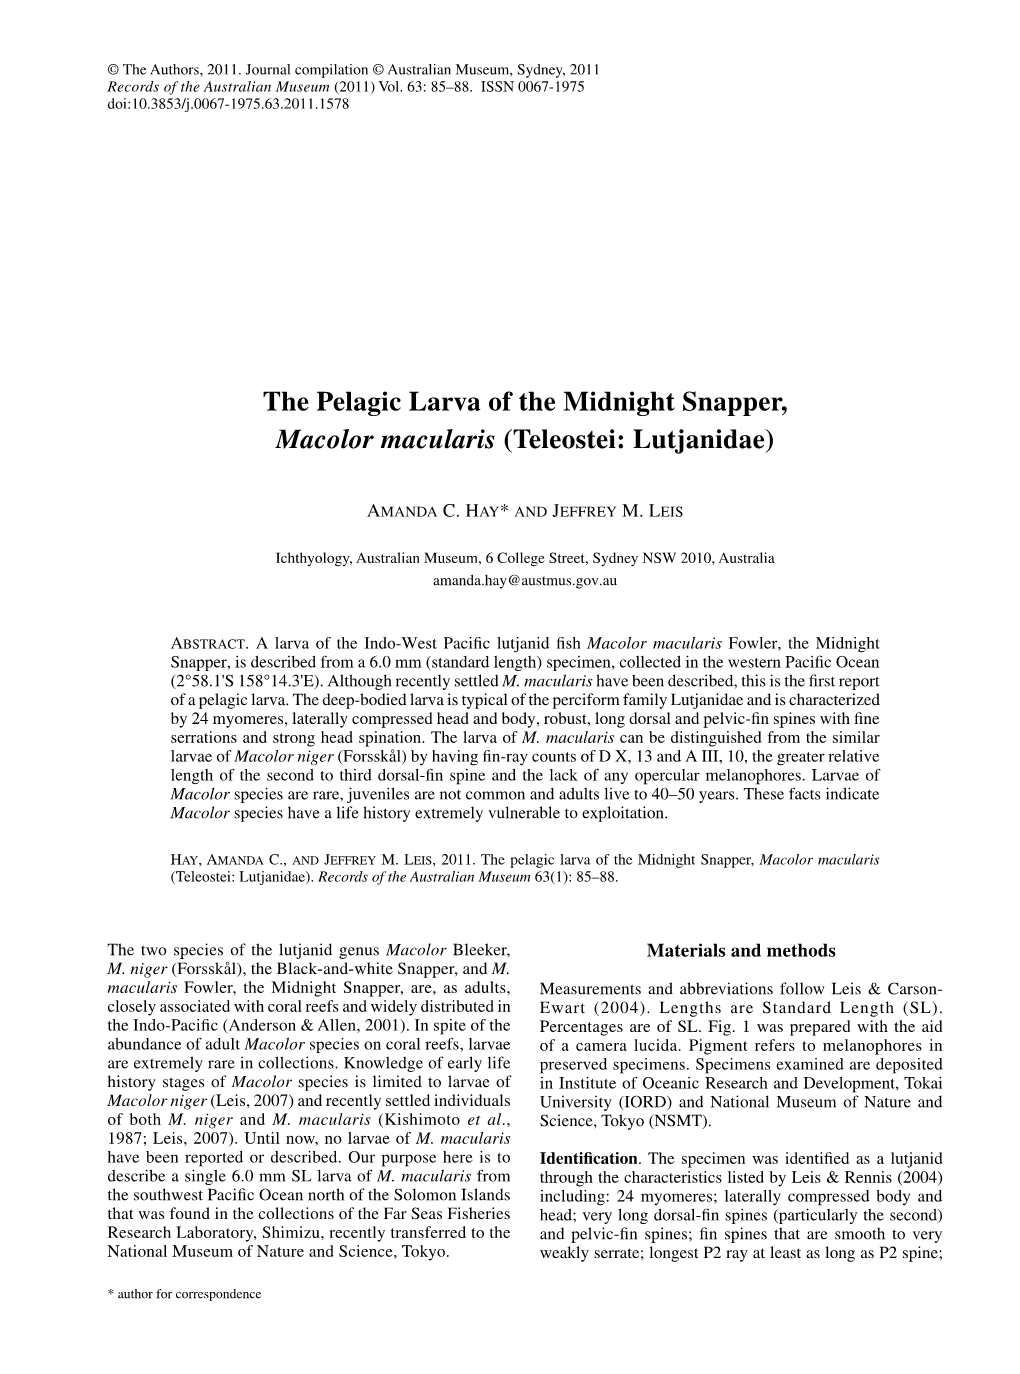 The Pelagic Larva of the Midnight Snapper, Macolor Macularis (Teleostei: Lutjanidae)